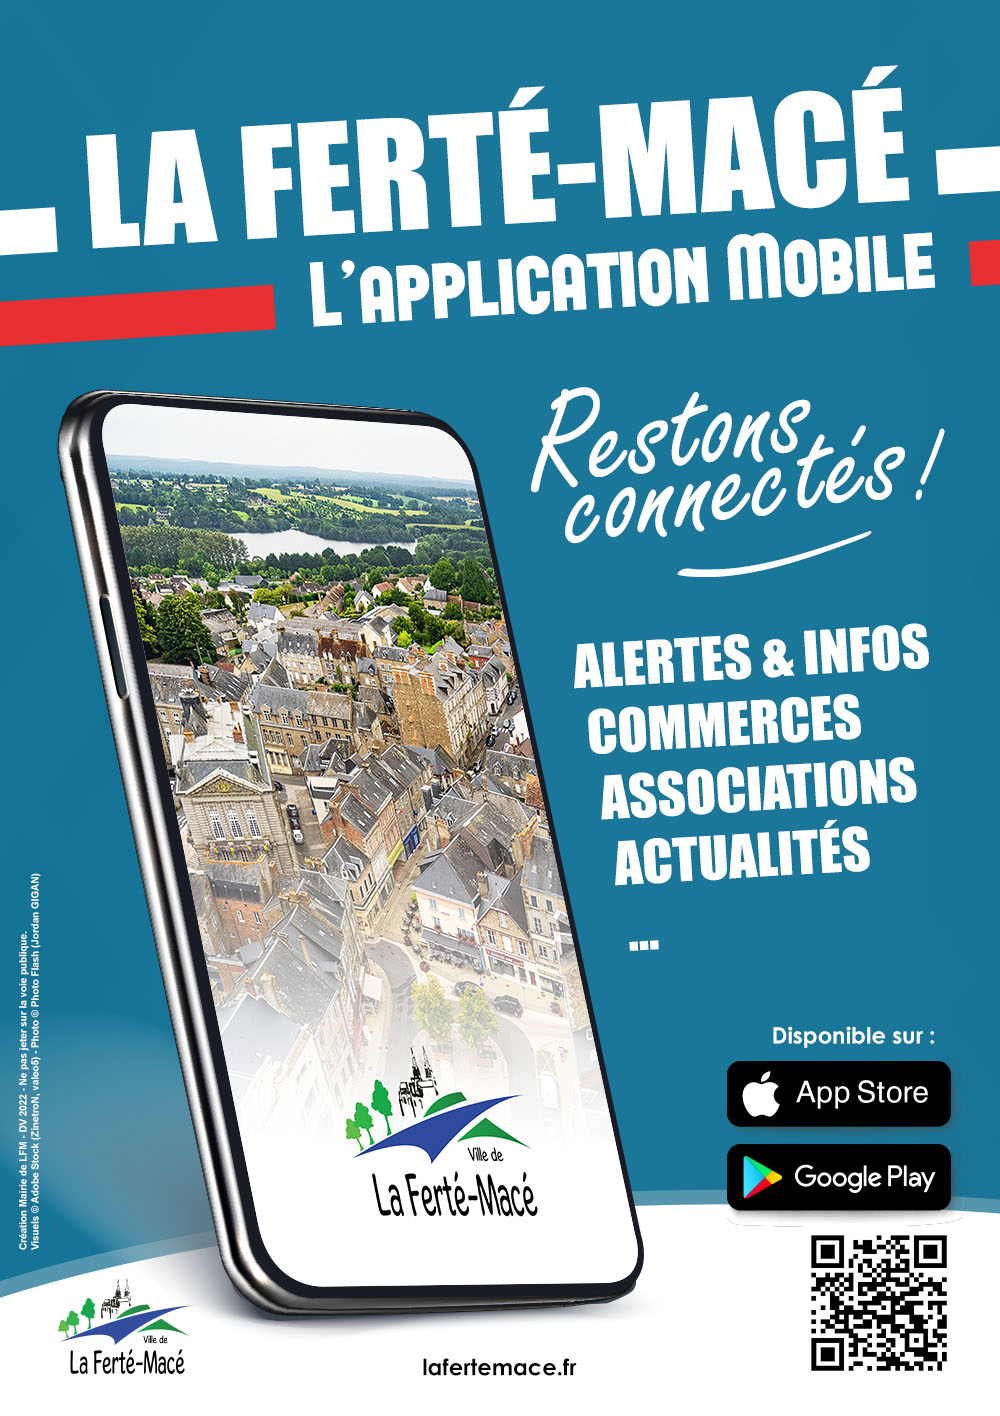 Application Mobile